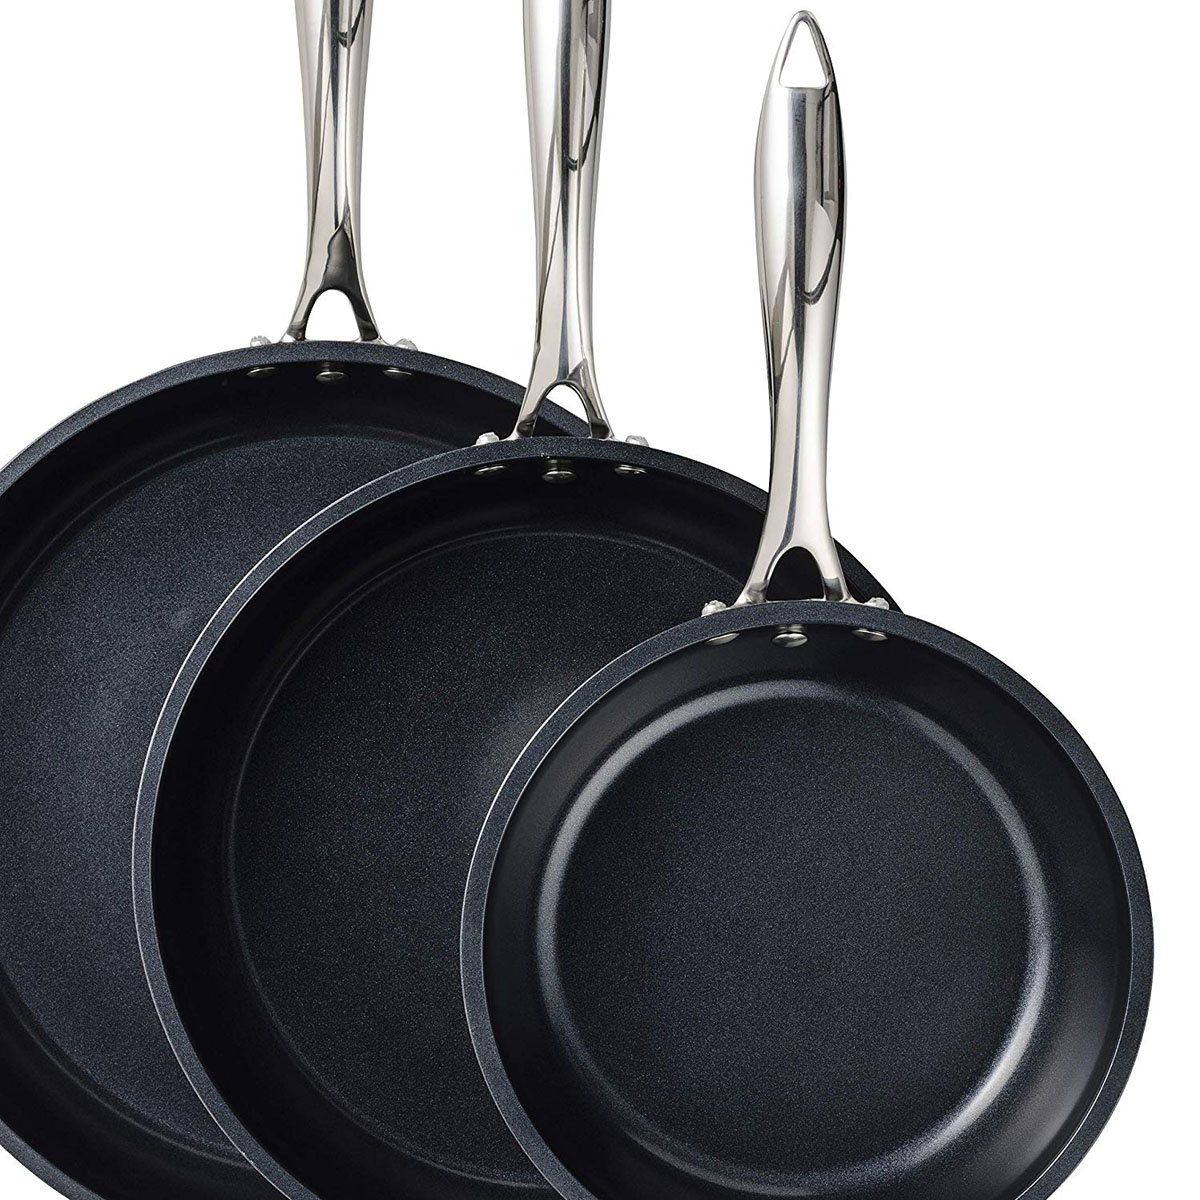 Kyocera Black Ceramic Coated Fry Pan 10" image 3